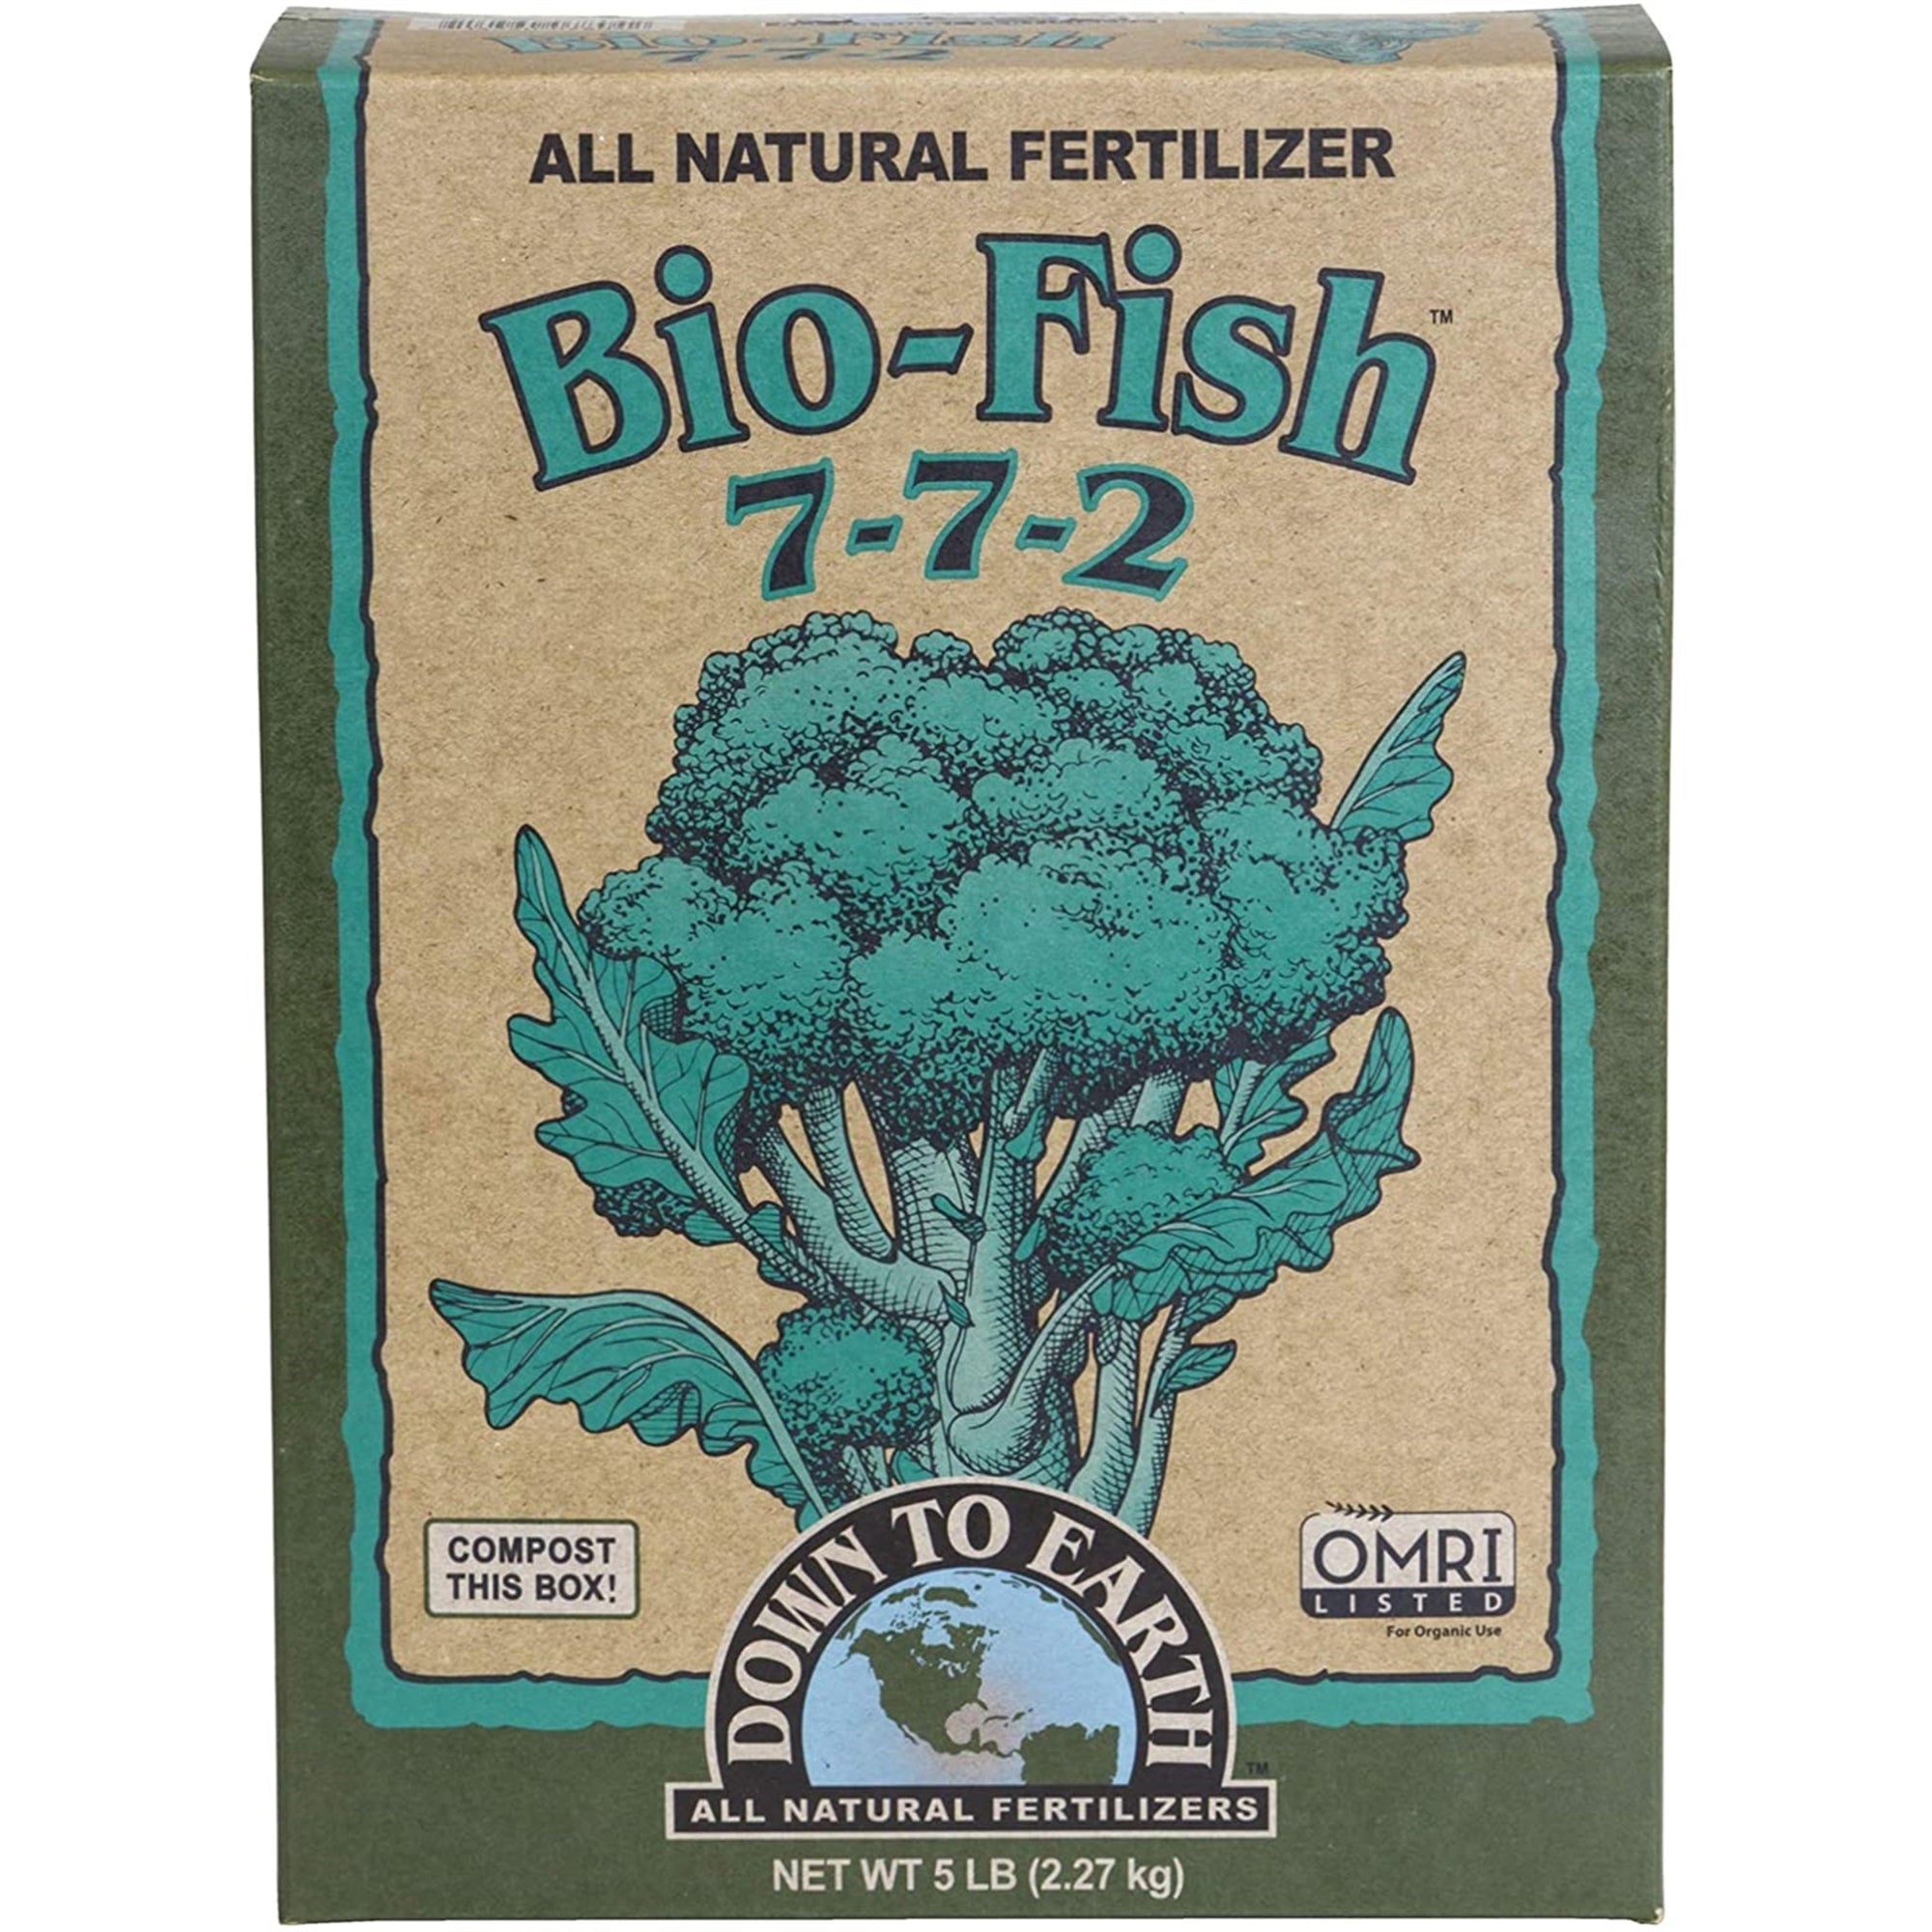 Down to Earth Organic Bio-Fish Fertilizer Mix 7-7-2, 5 lb